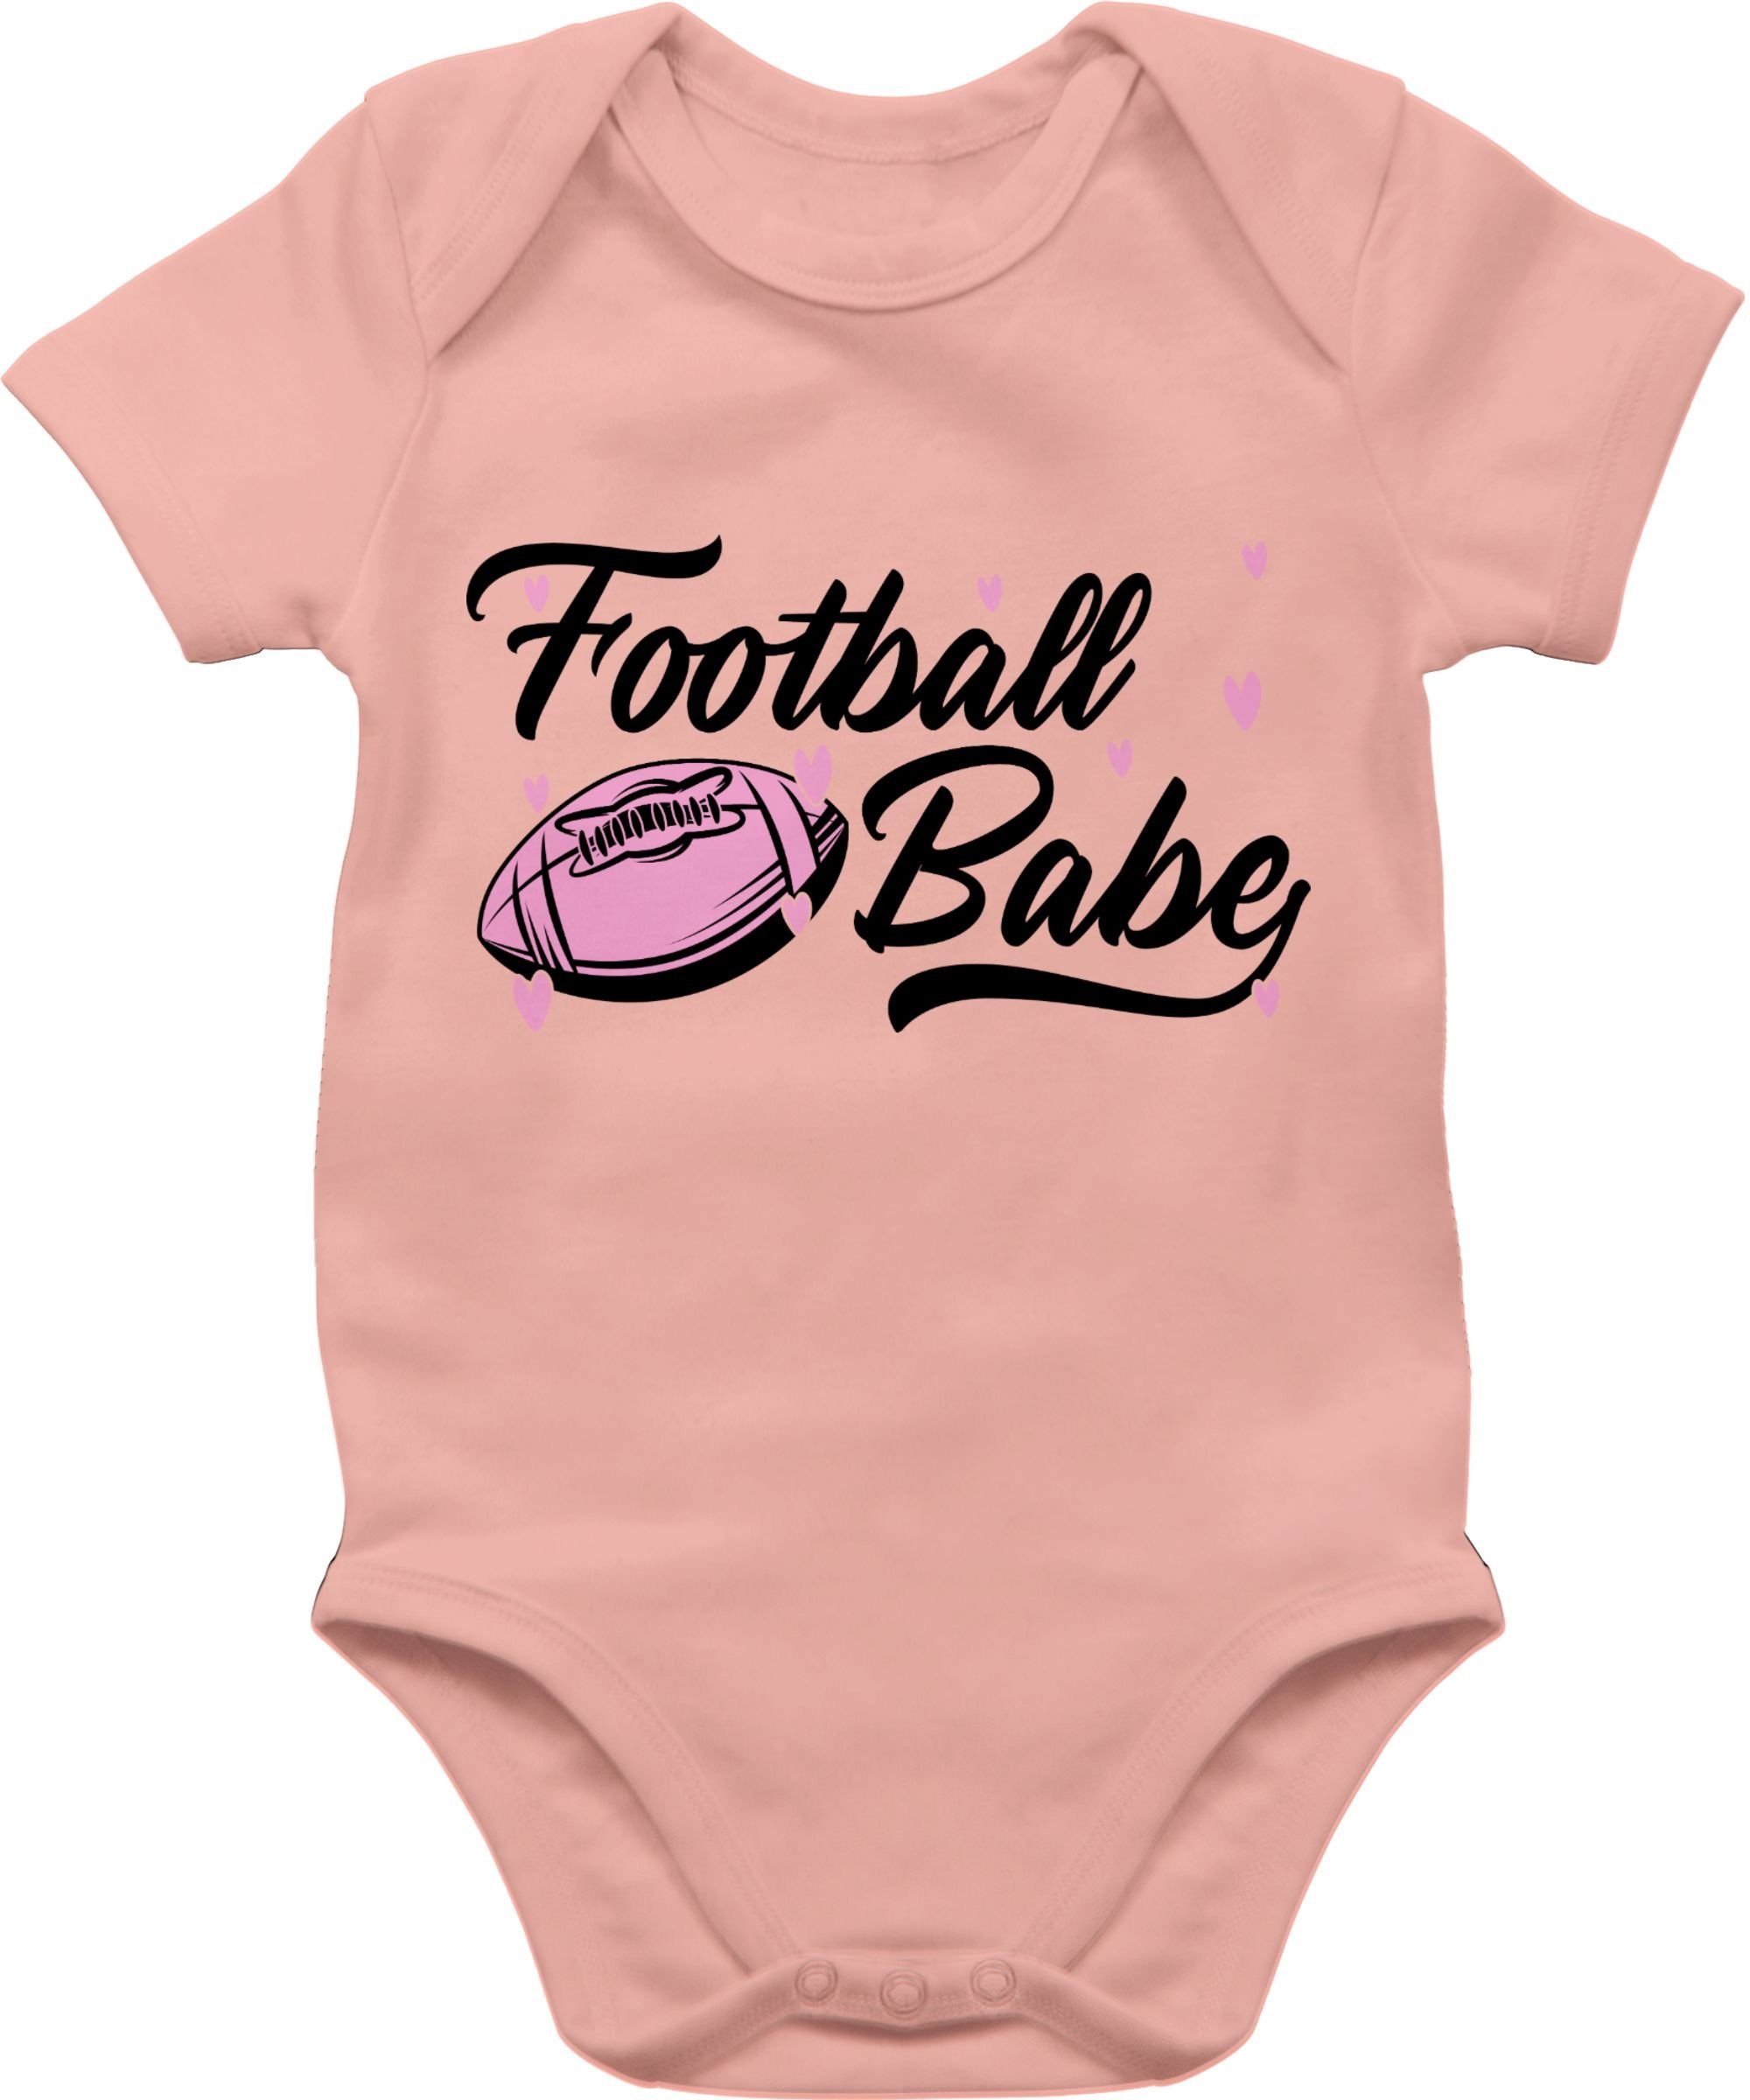 Shirtracer Shirtbody Football Babe rosa/schwarz Sport & Bewegung Baby 3 Babyrosa